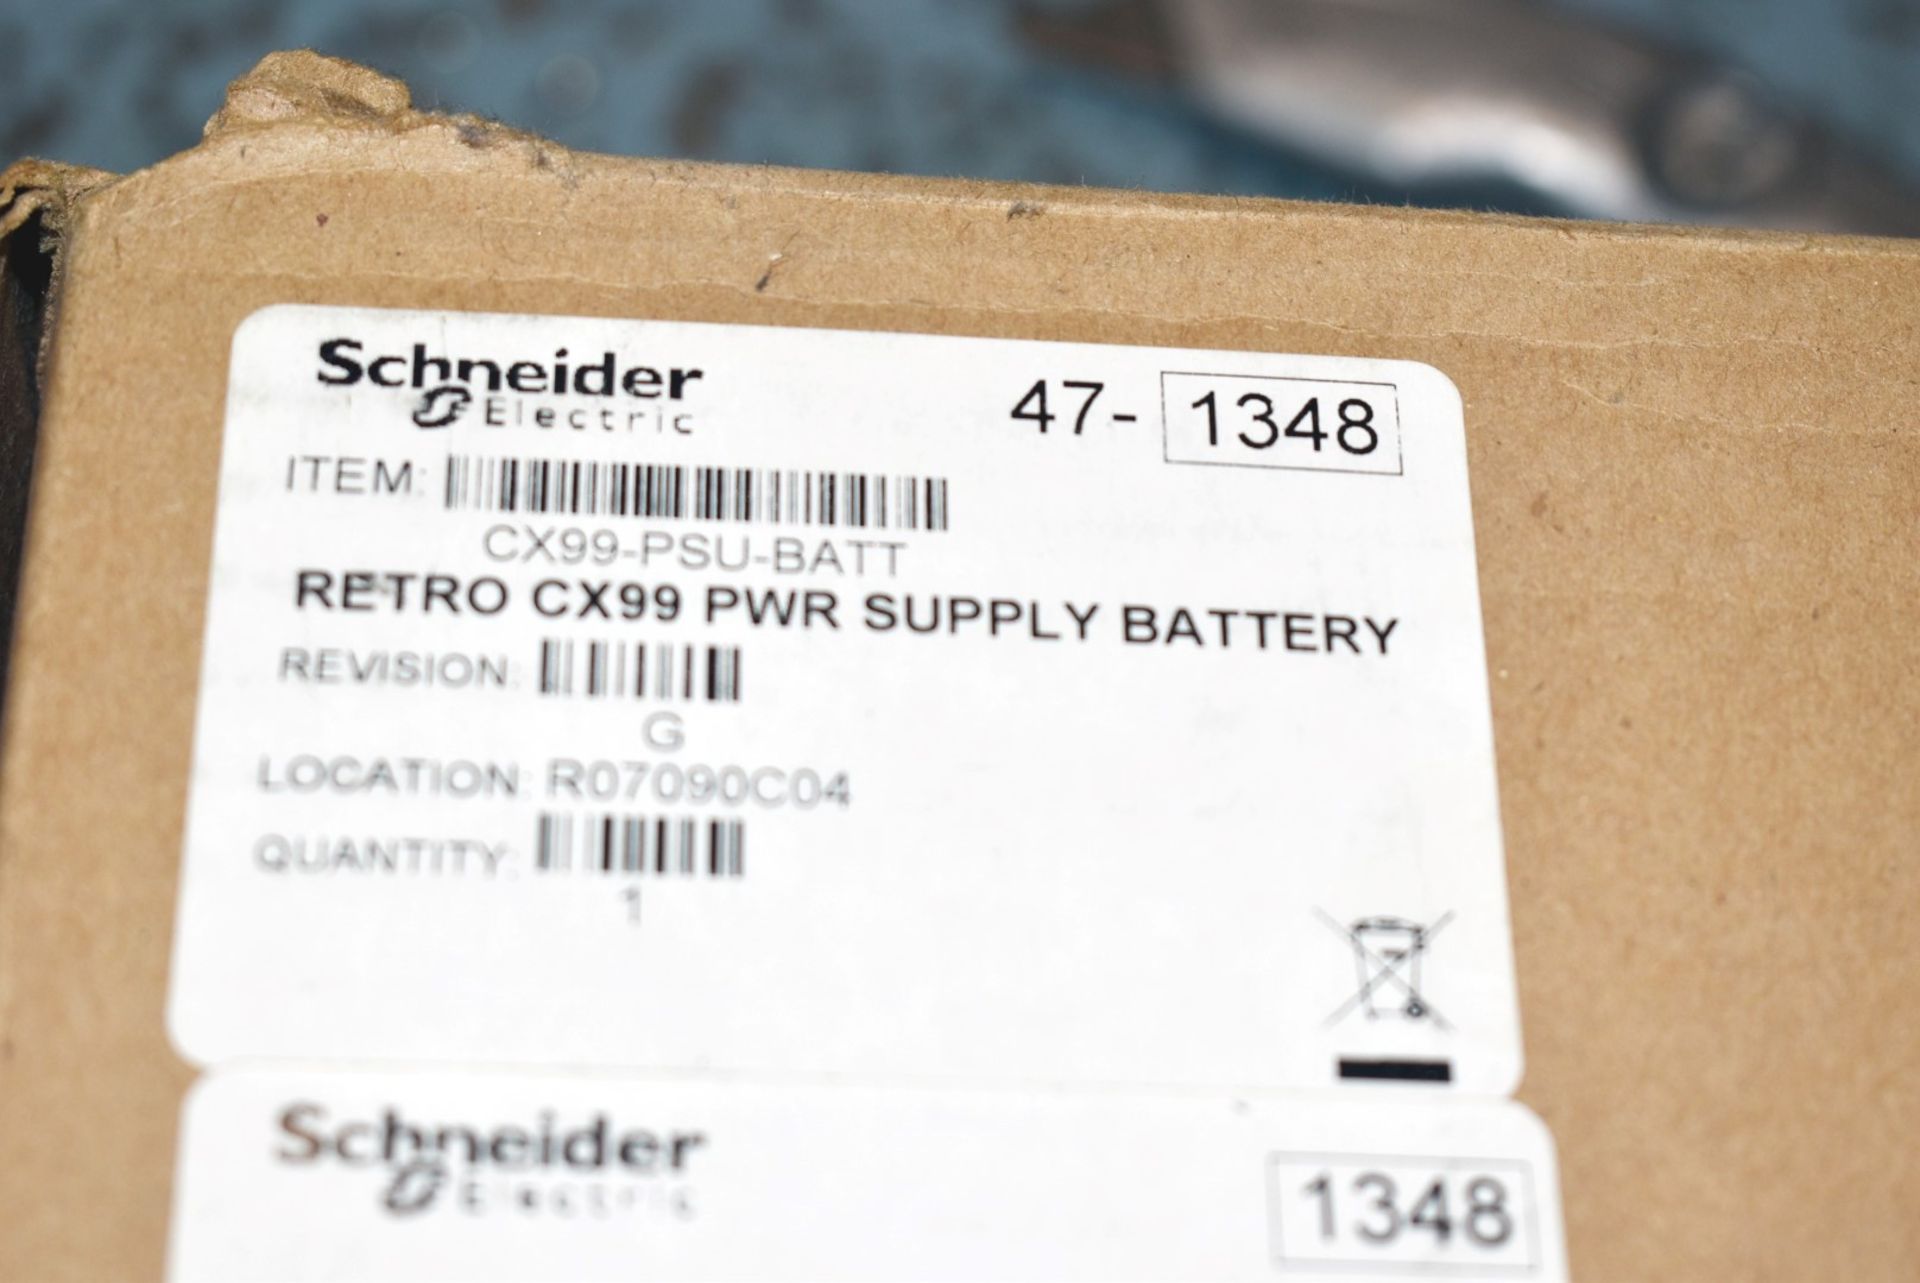 1 x Schneider CX99 Power Supply With Batteries - Model CX99-PSU-BATT - Unused Boxed Stock RRP £2,196 - Image 9 of 9